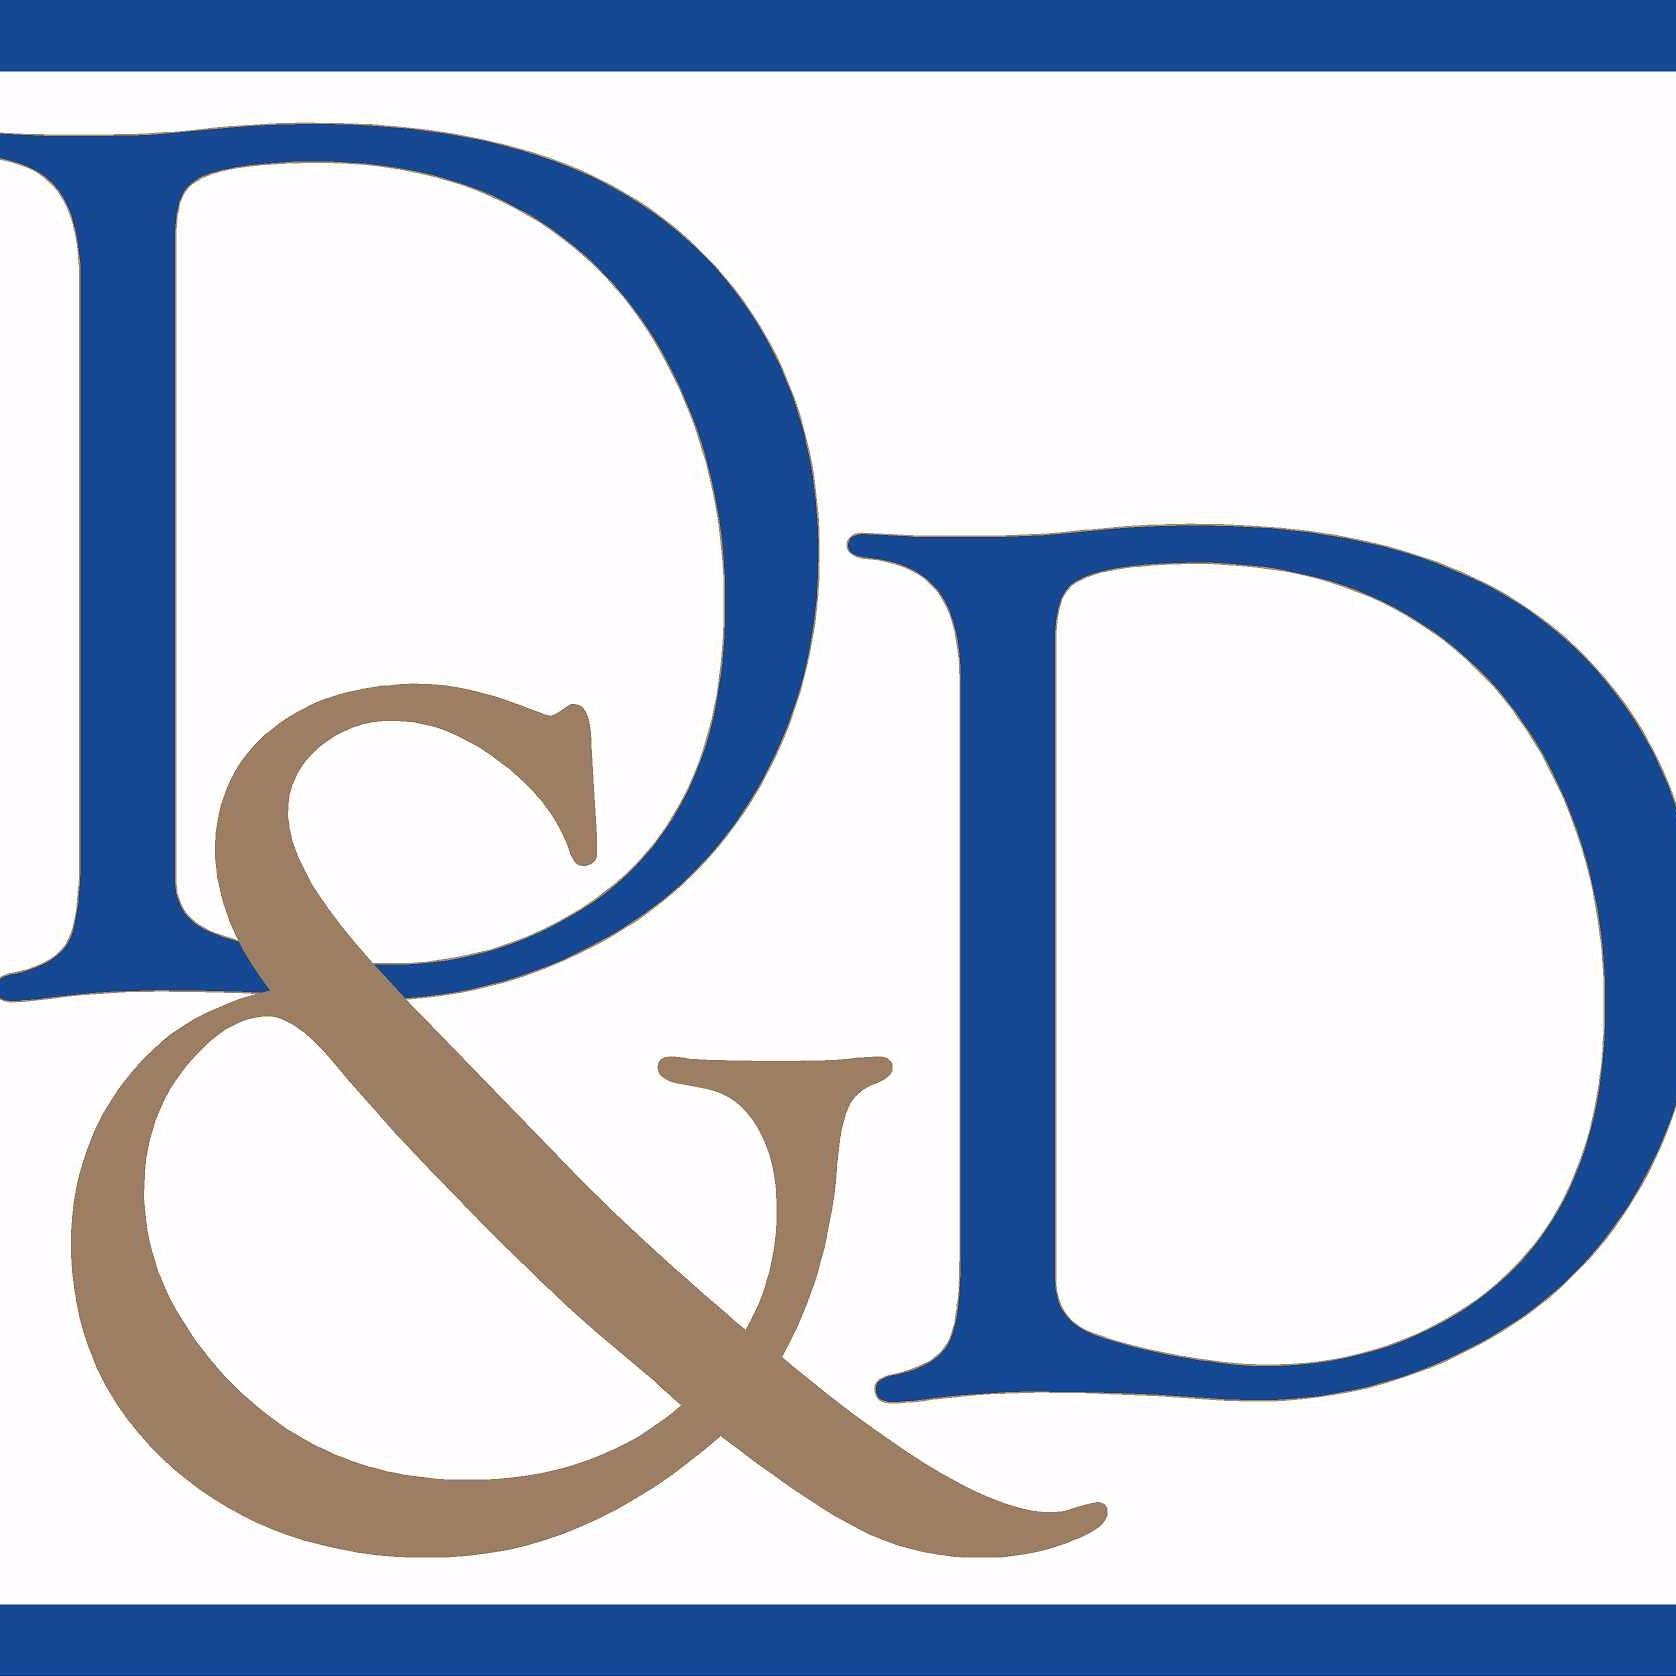 Deutchman & Drews, LLC